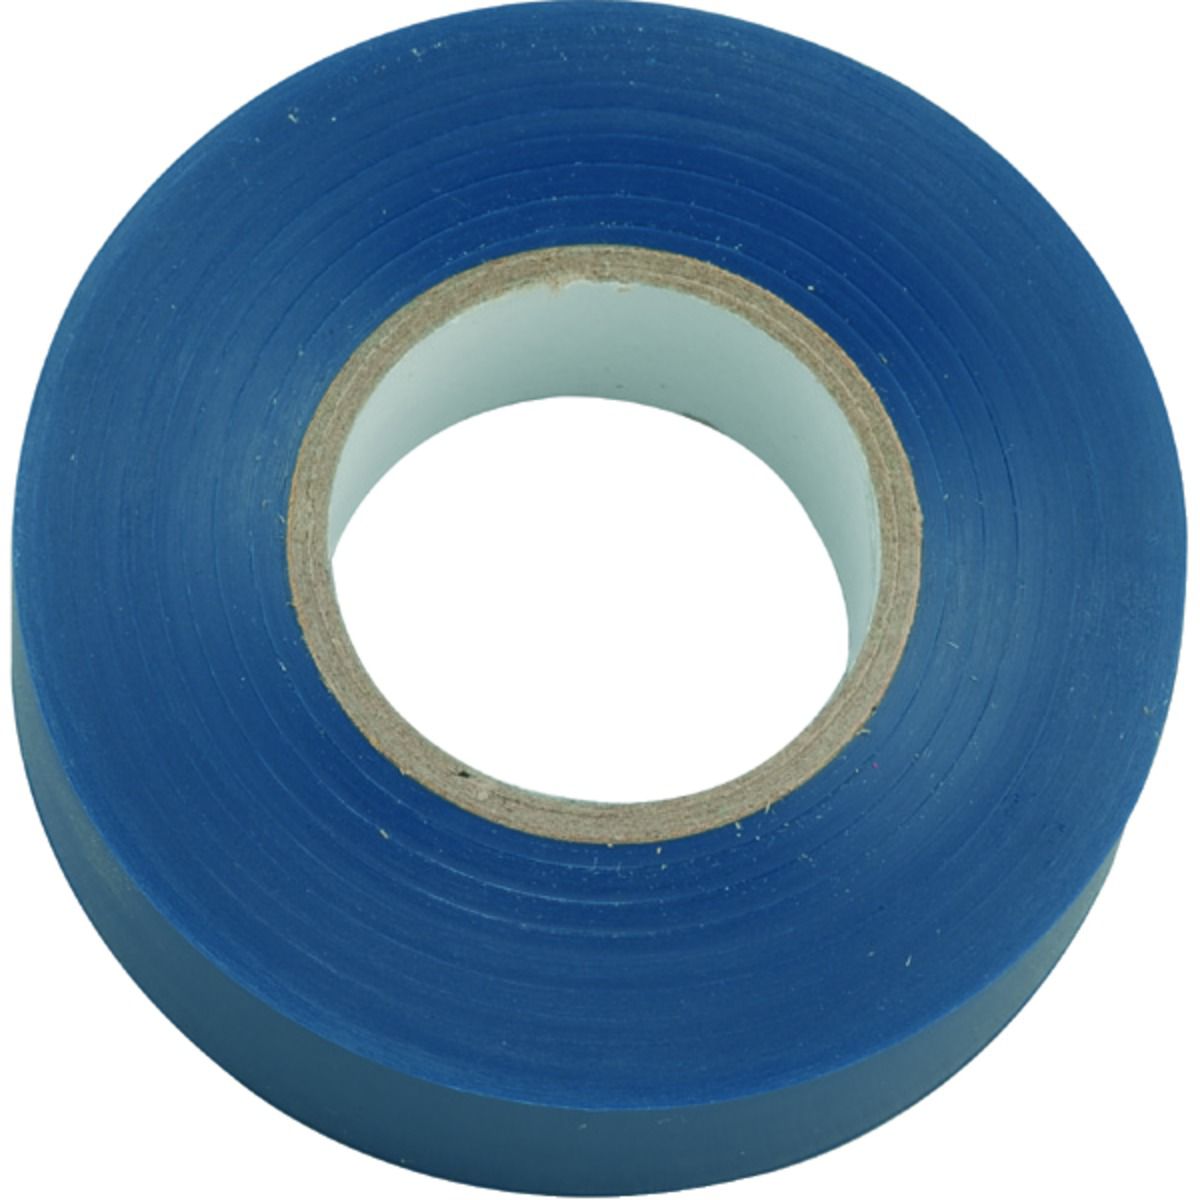 Image of Deta Blue PVC Electrical Insulation Tape - 20m x 19mm